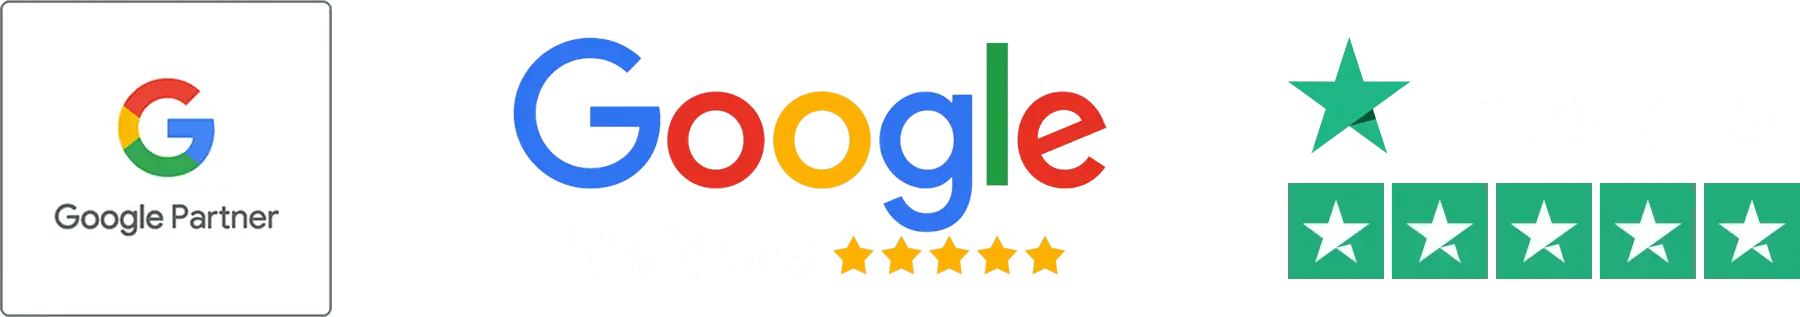 google partner badge, google reviews and trustpilot rating badges